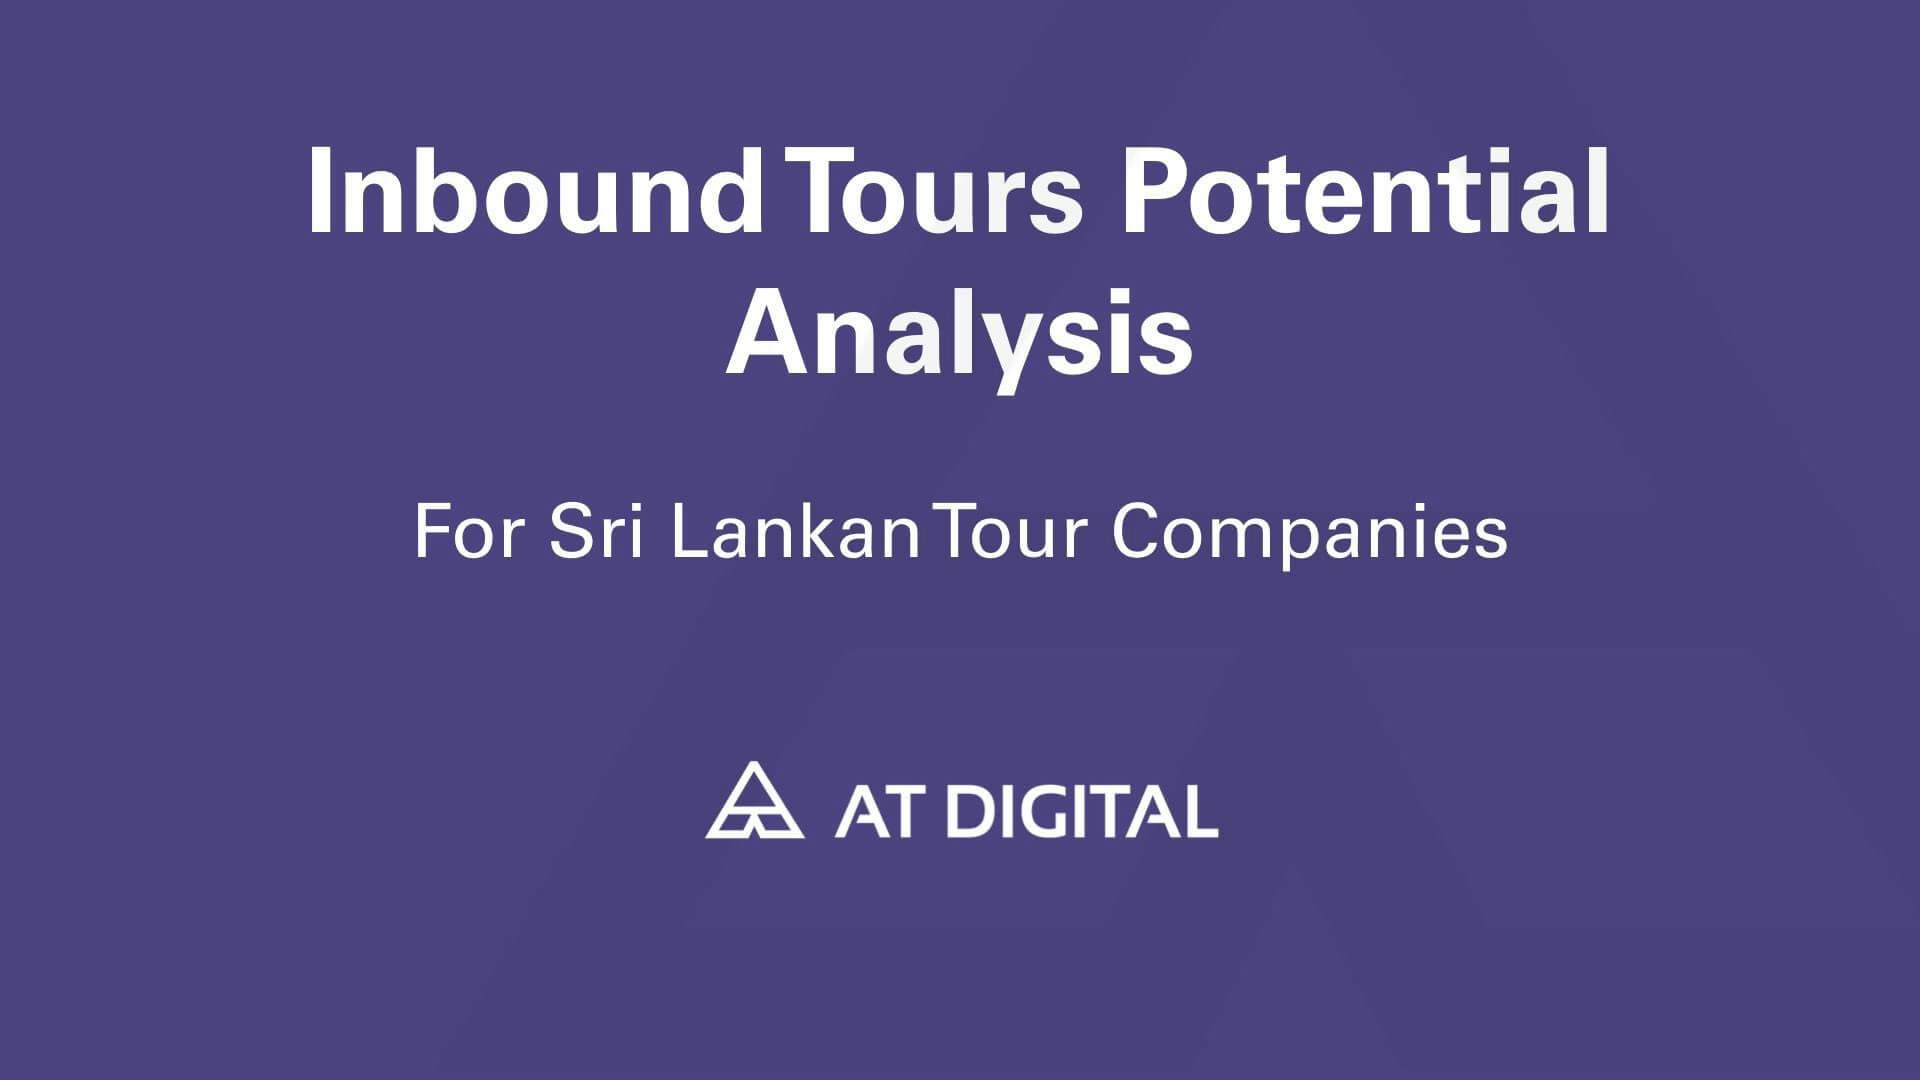 Inbound tours potential analysis